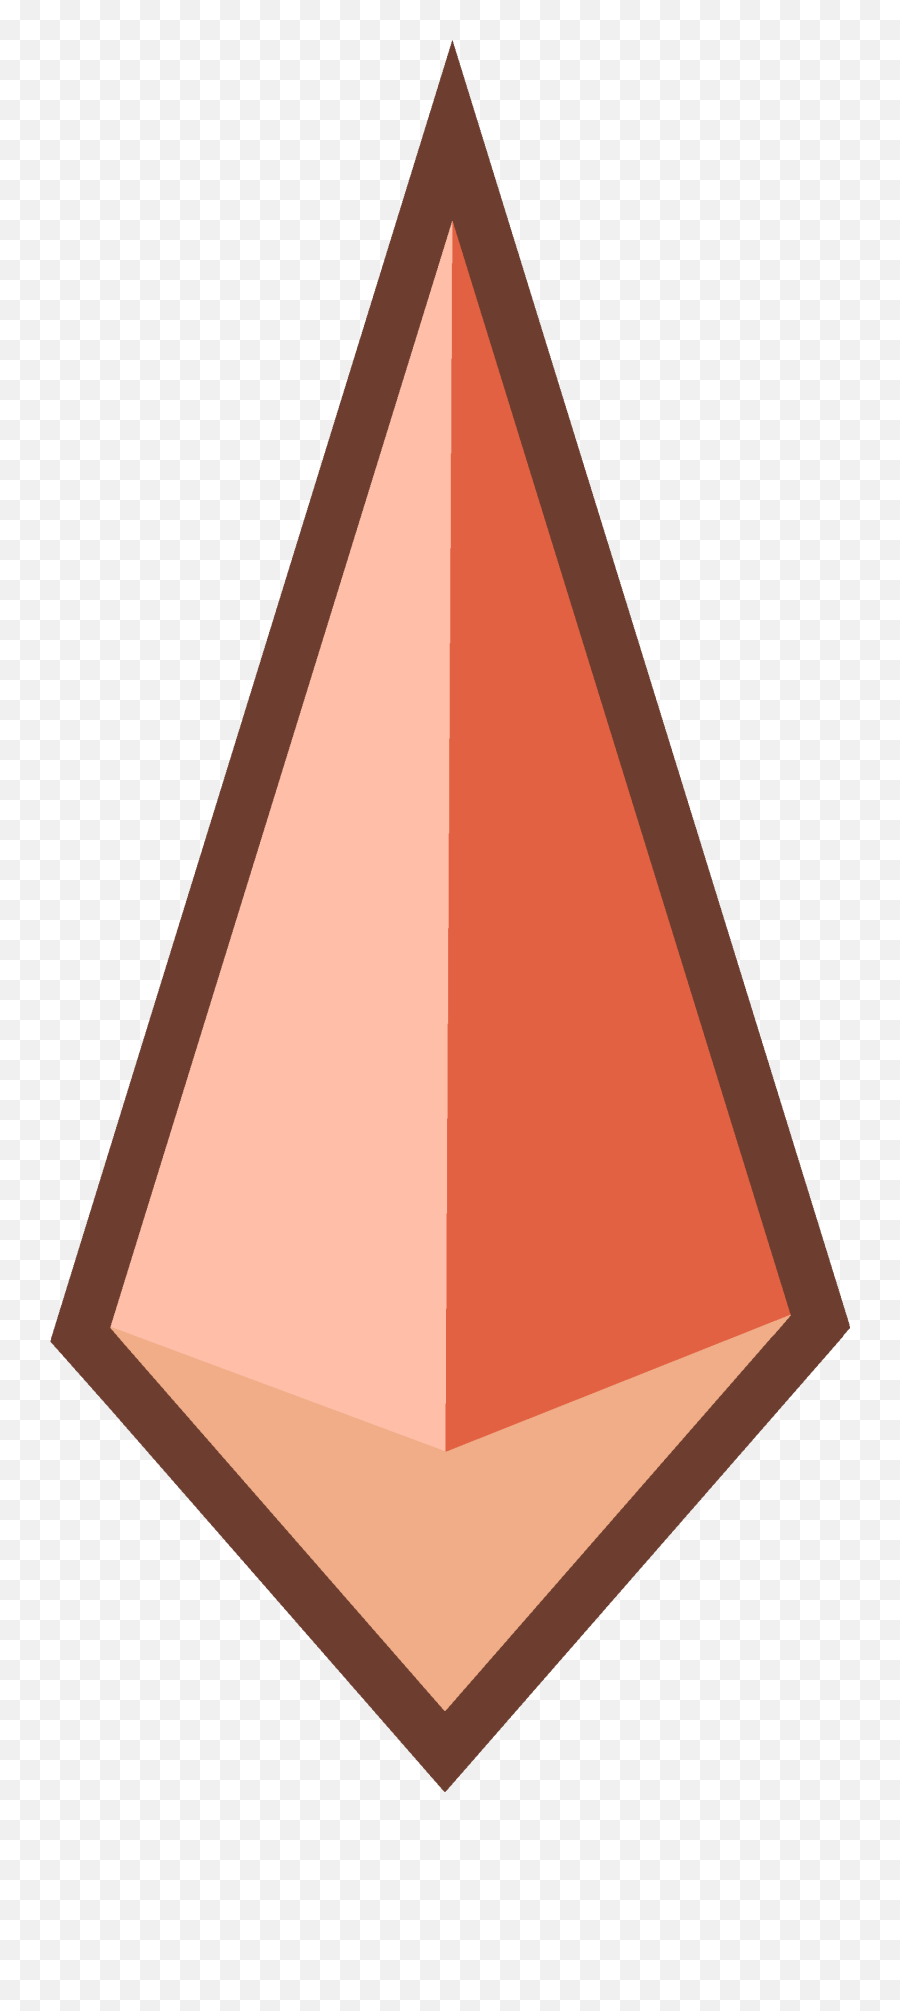 Cone Clipart Triangle Nose - Crystal Gem Amethyst Steven Universe Jasper Emoji,Nose Arrow Arrow Arrow Emoji